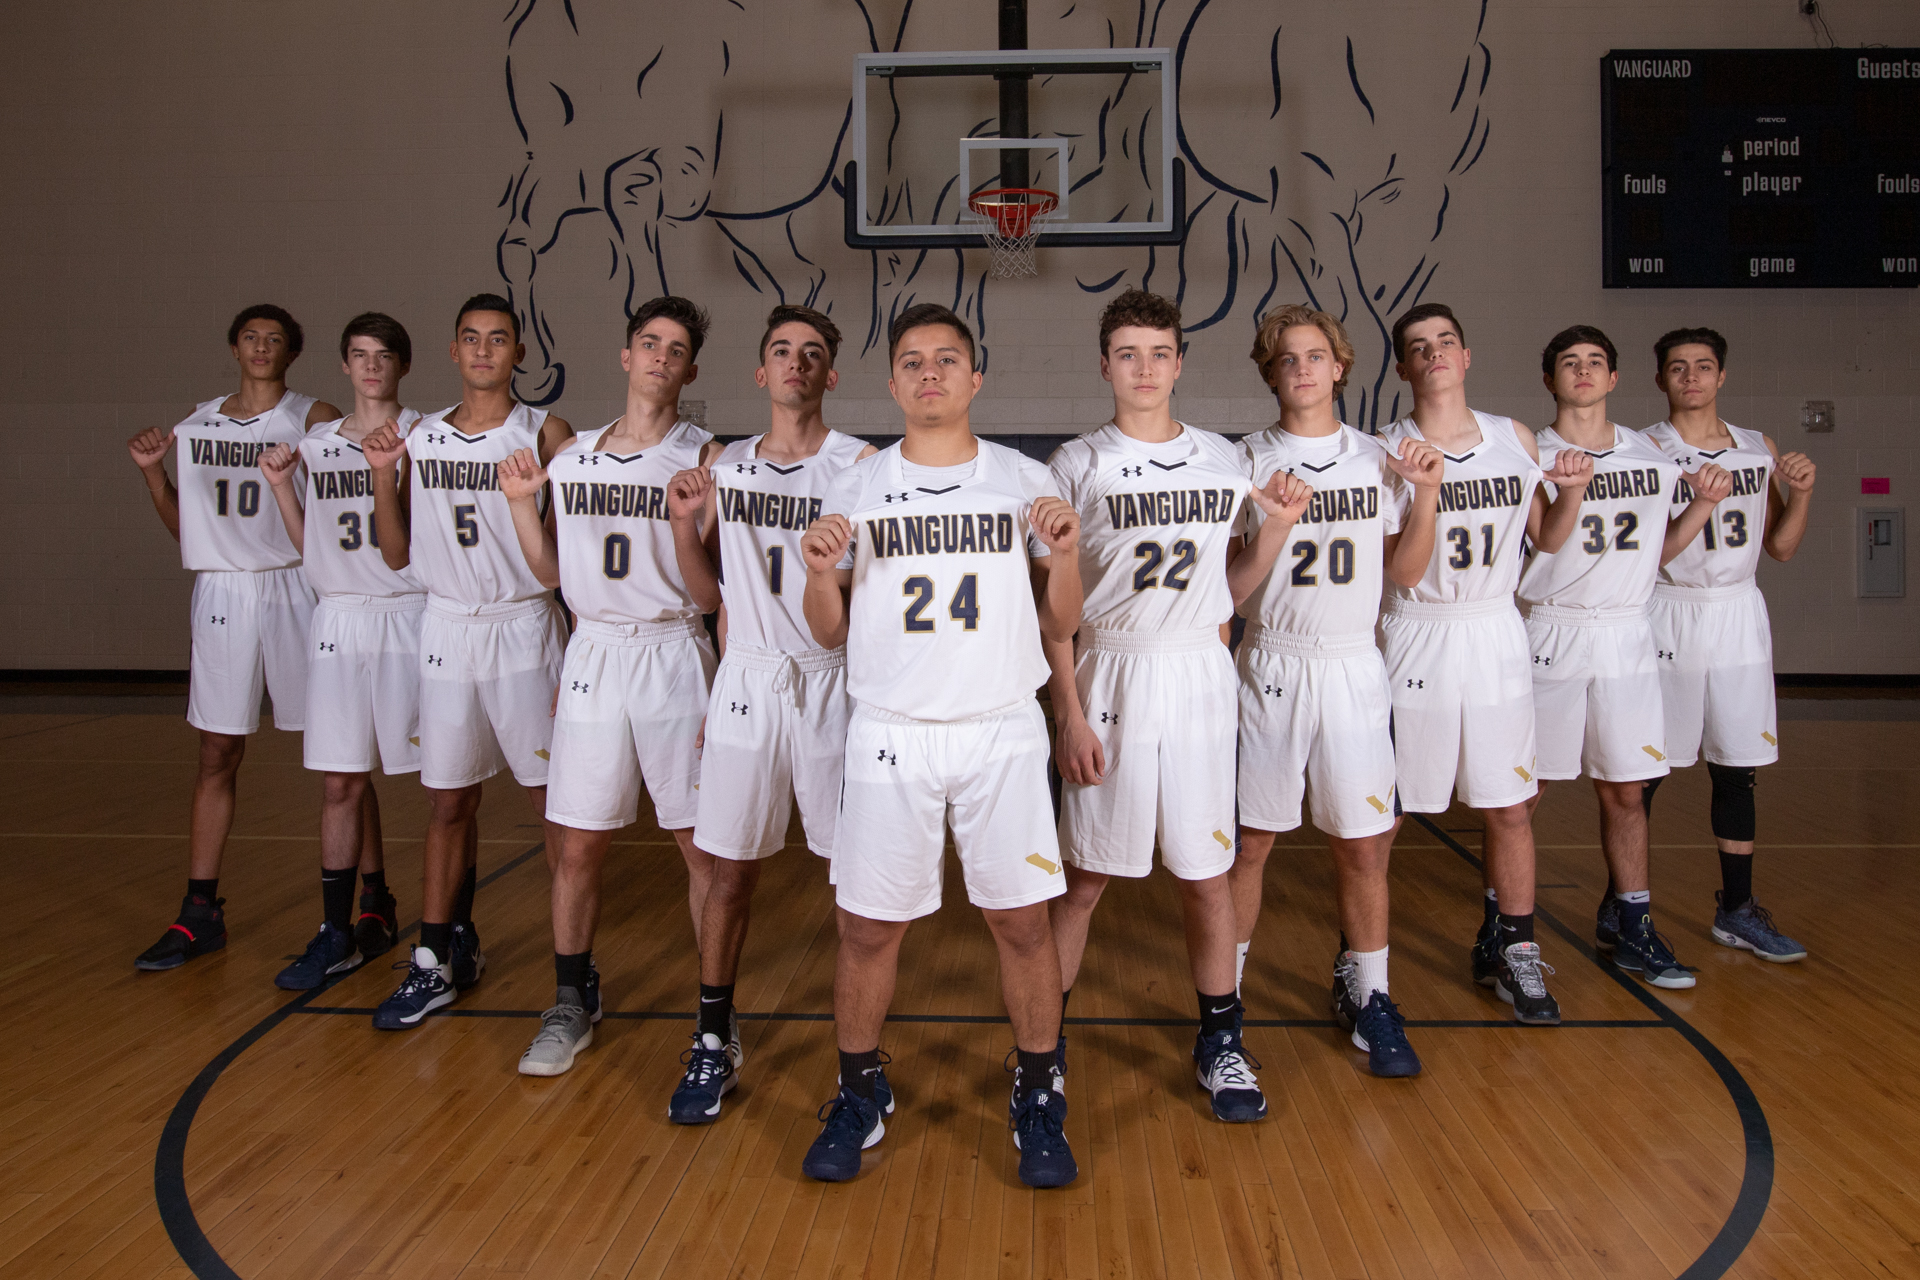 2018 Boys Basketball team at the Vanguard School in Colorado Springs